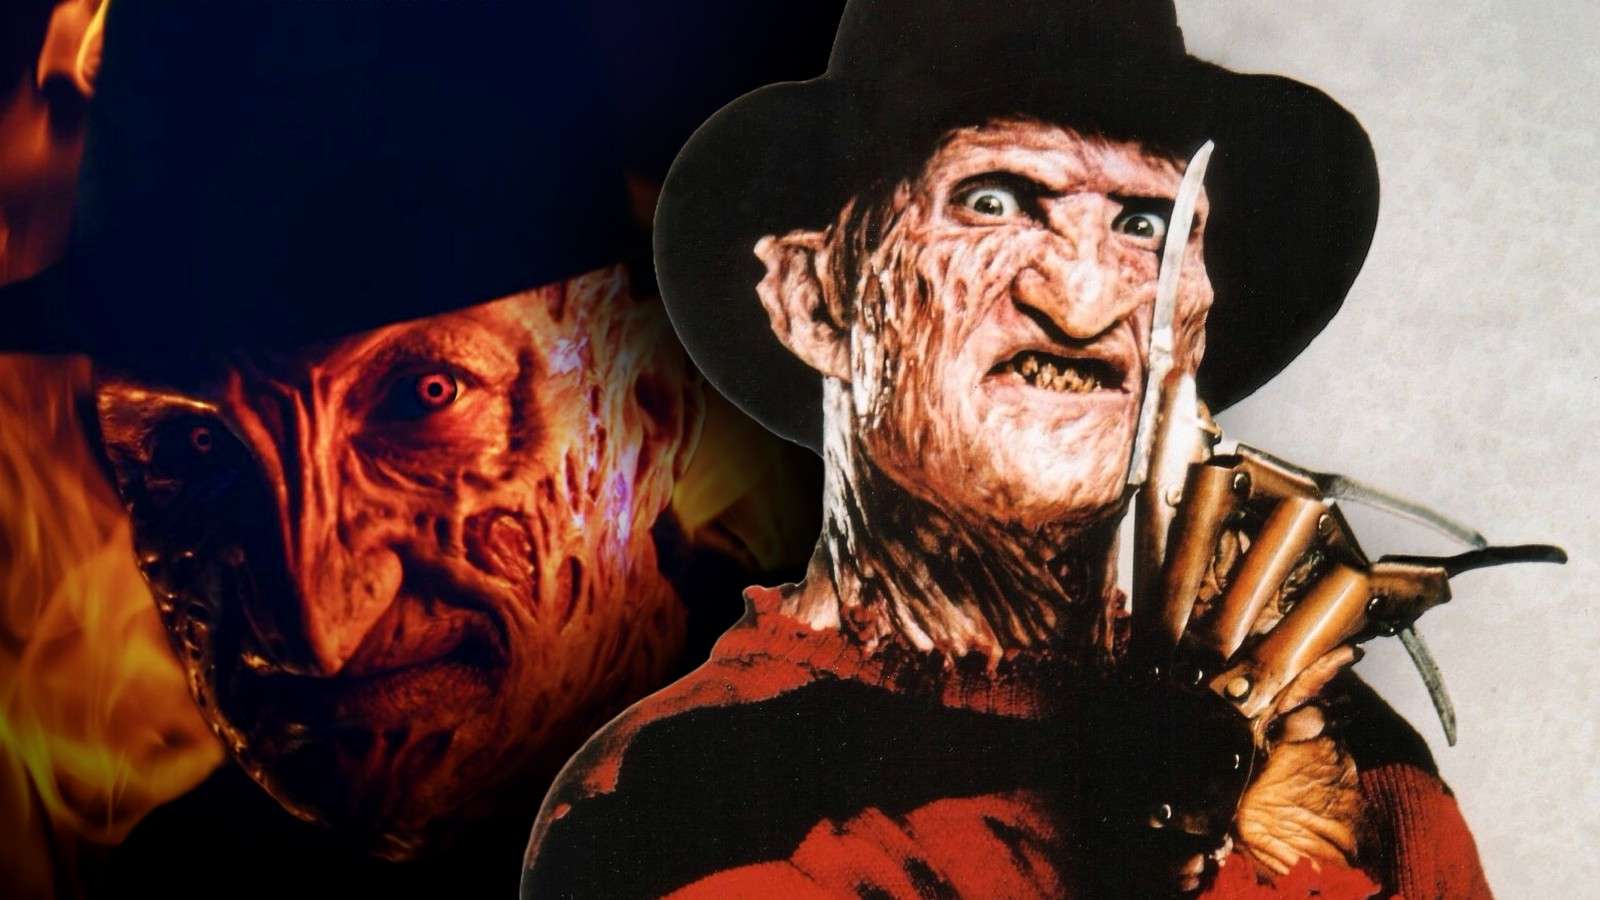 Robert Englund as Freddy Krueger from A Nightmare on Elm Street